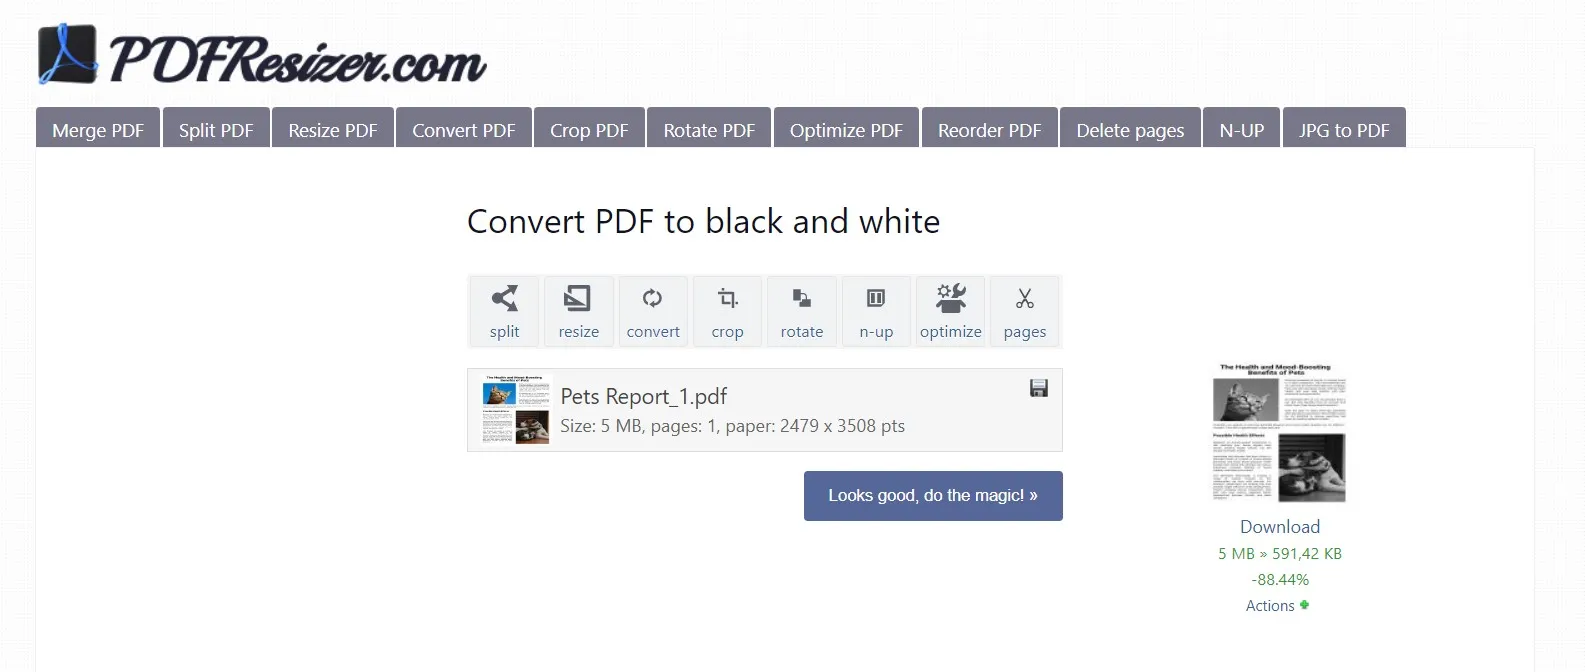 convert the pdf to black and white on pdfresizer.com